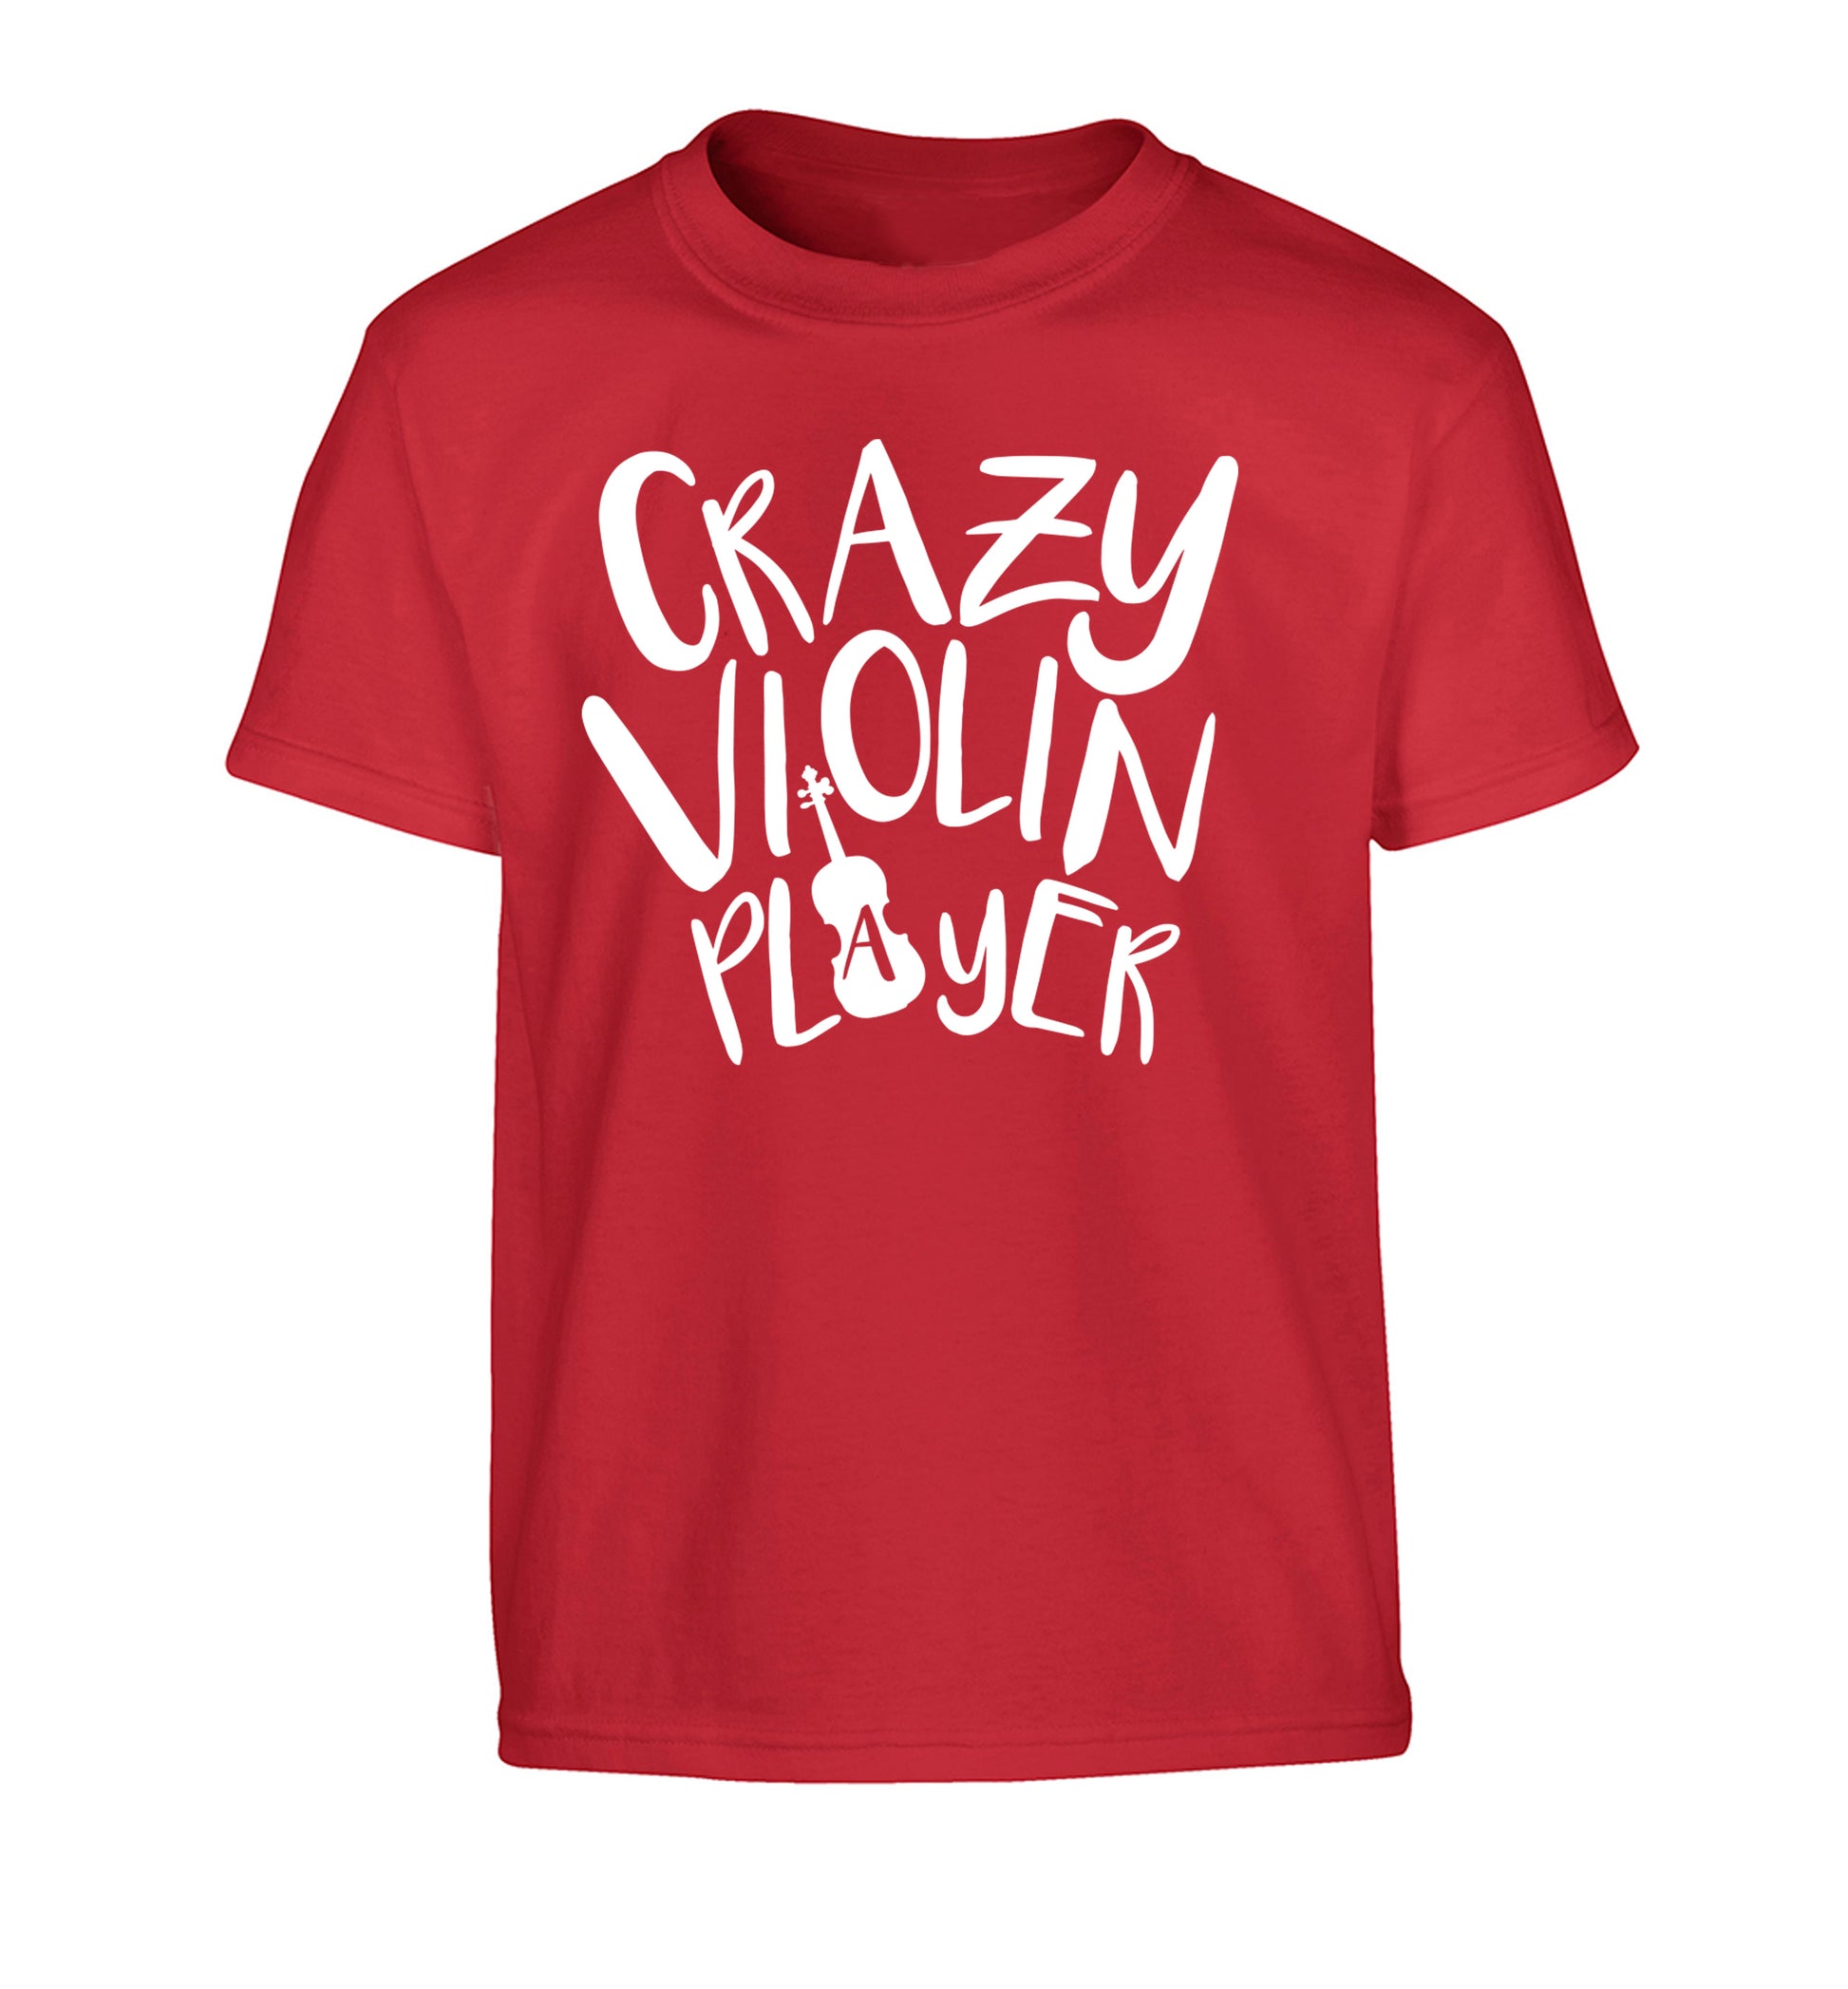 Crazy Violin Player Children's red Tshirt 12-13 Years